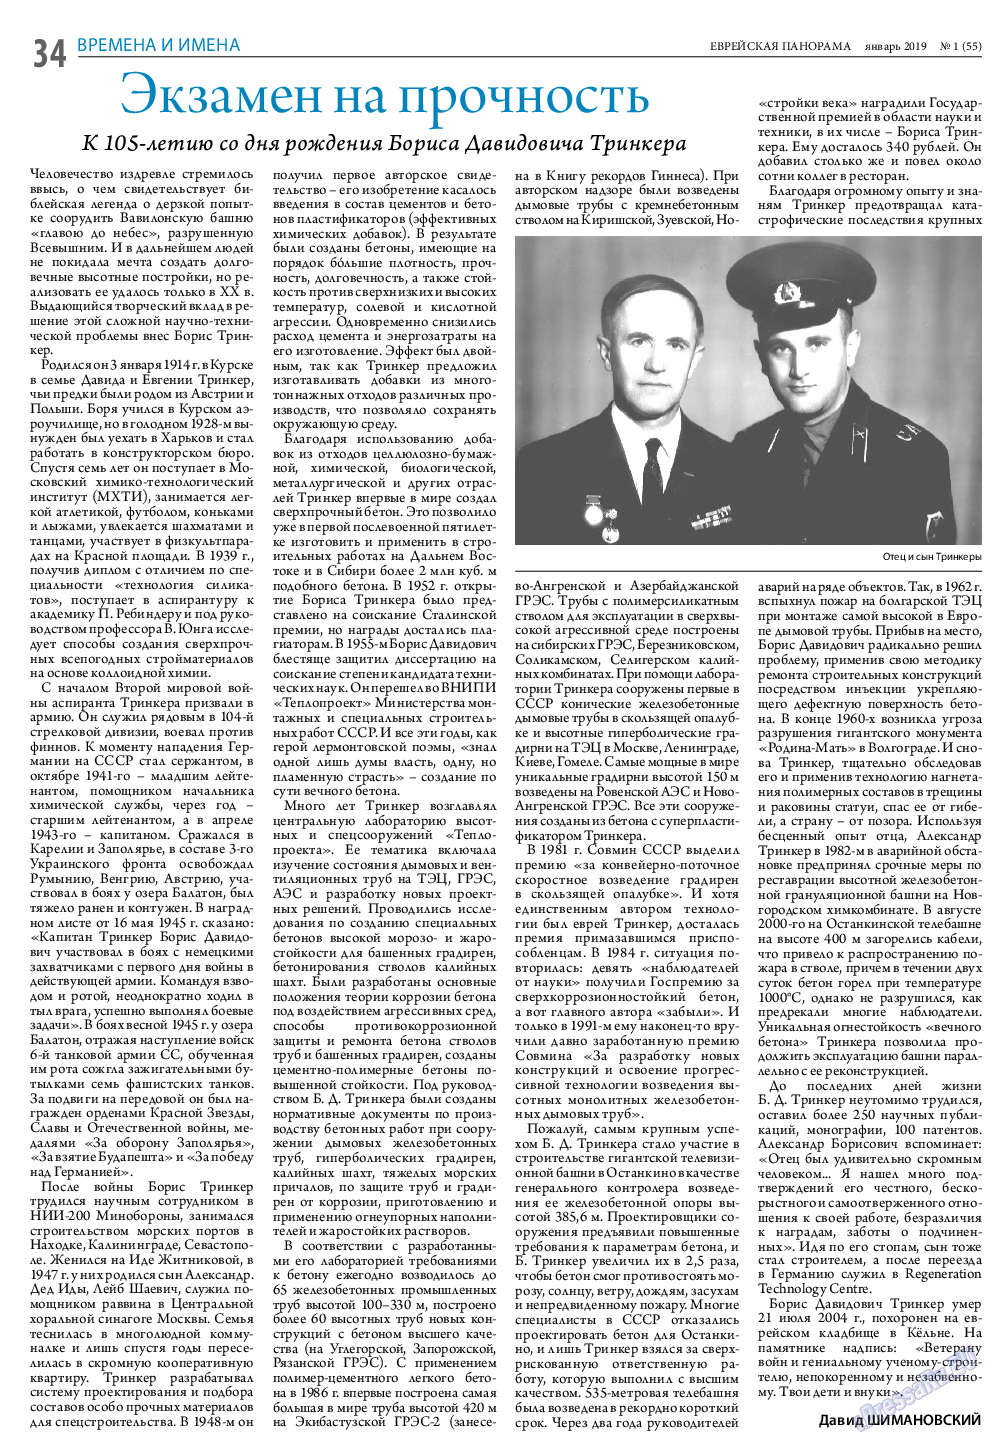 Еврейская панорама, газета. 2019 №1 стр.34